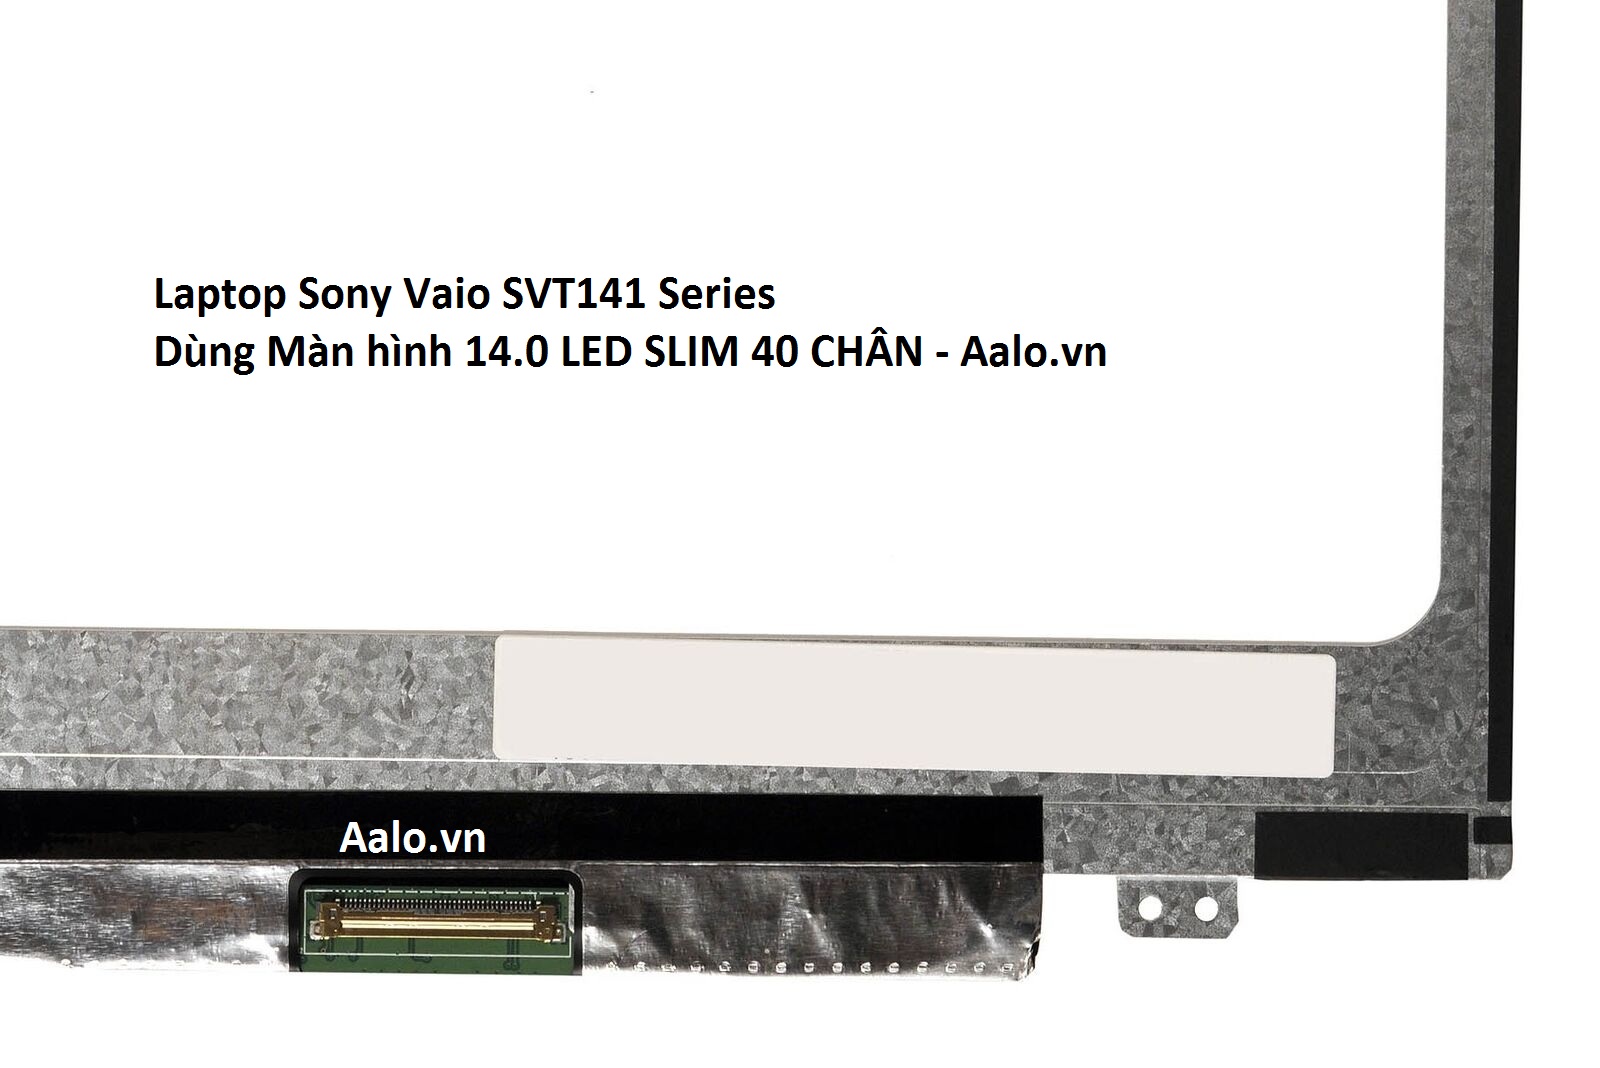 Màn hình Laptop Sony Vaio SVT141 Series - Aalo.vn